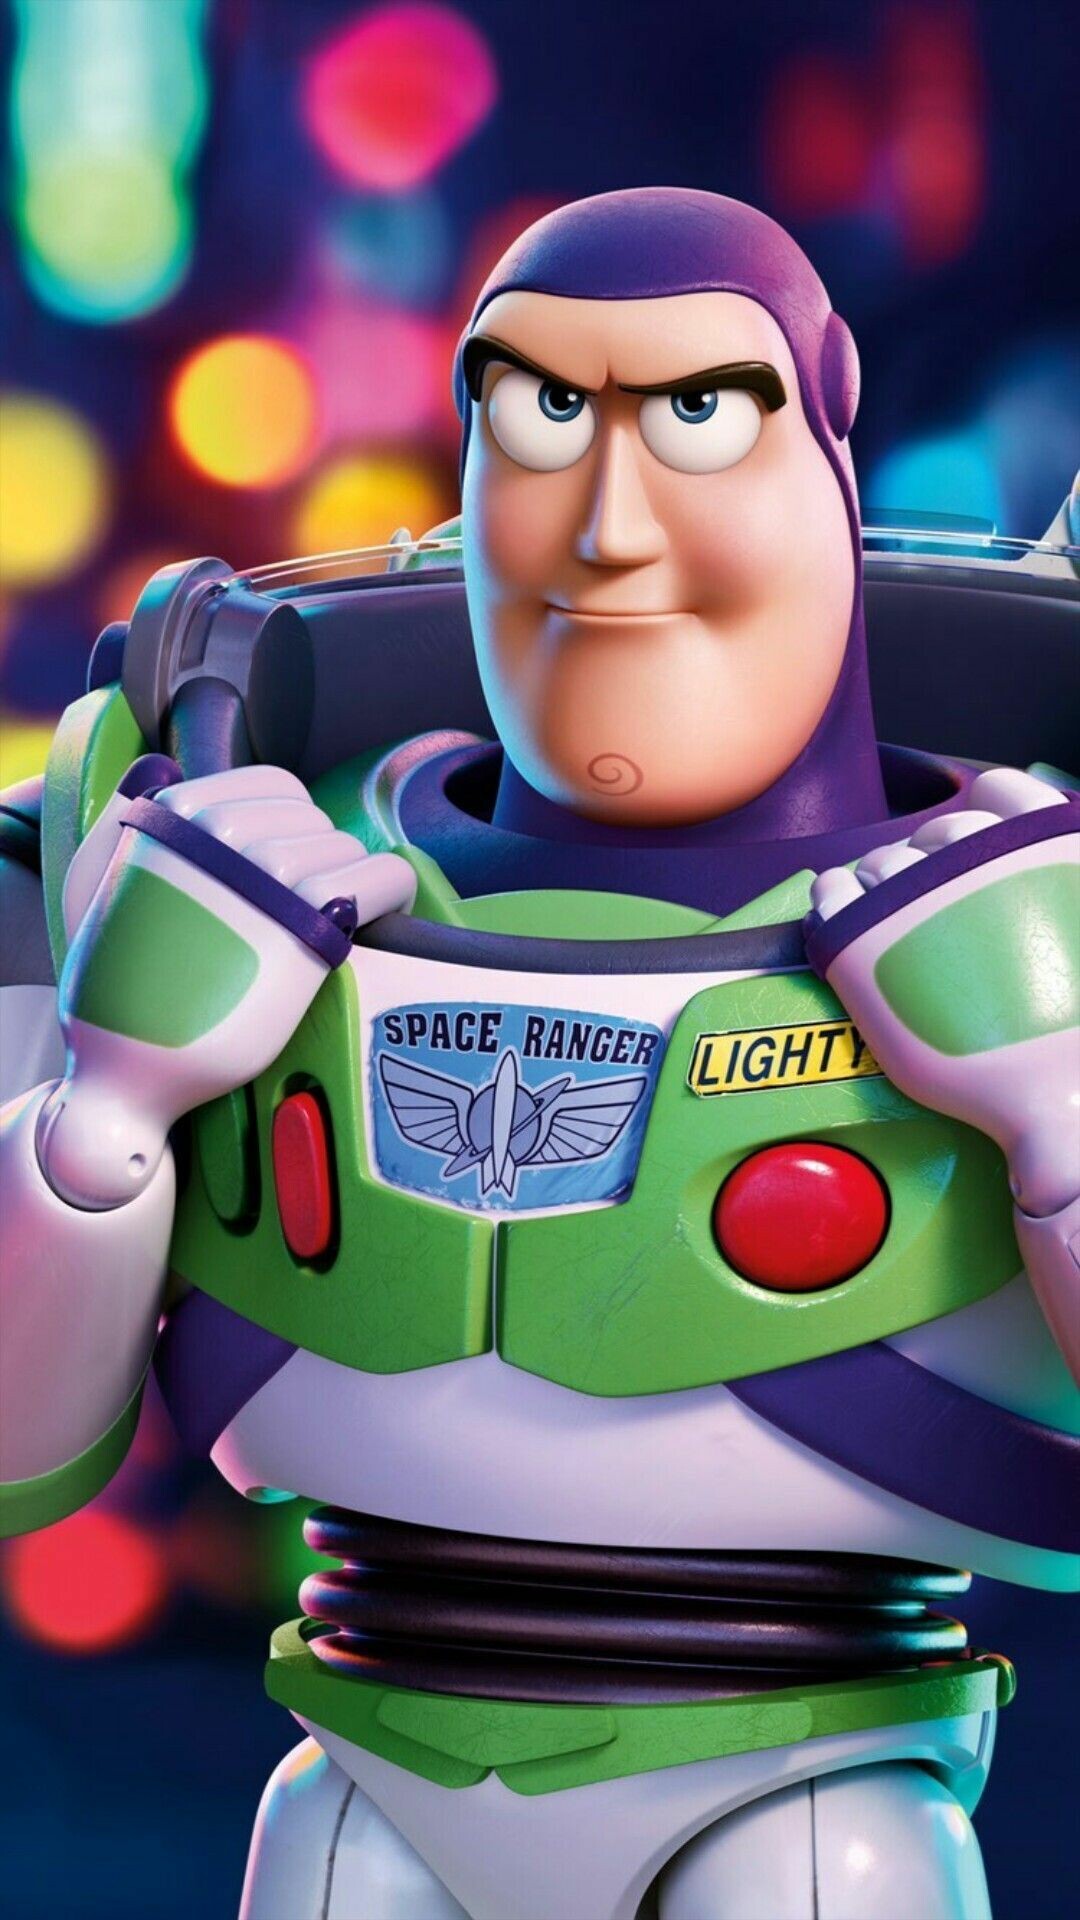 Toy Story: Buzz Lightyear, a spaceman action figure originally belonging to Andy Davis, Disney. 1080x1920 Full HD Wallpaper.